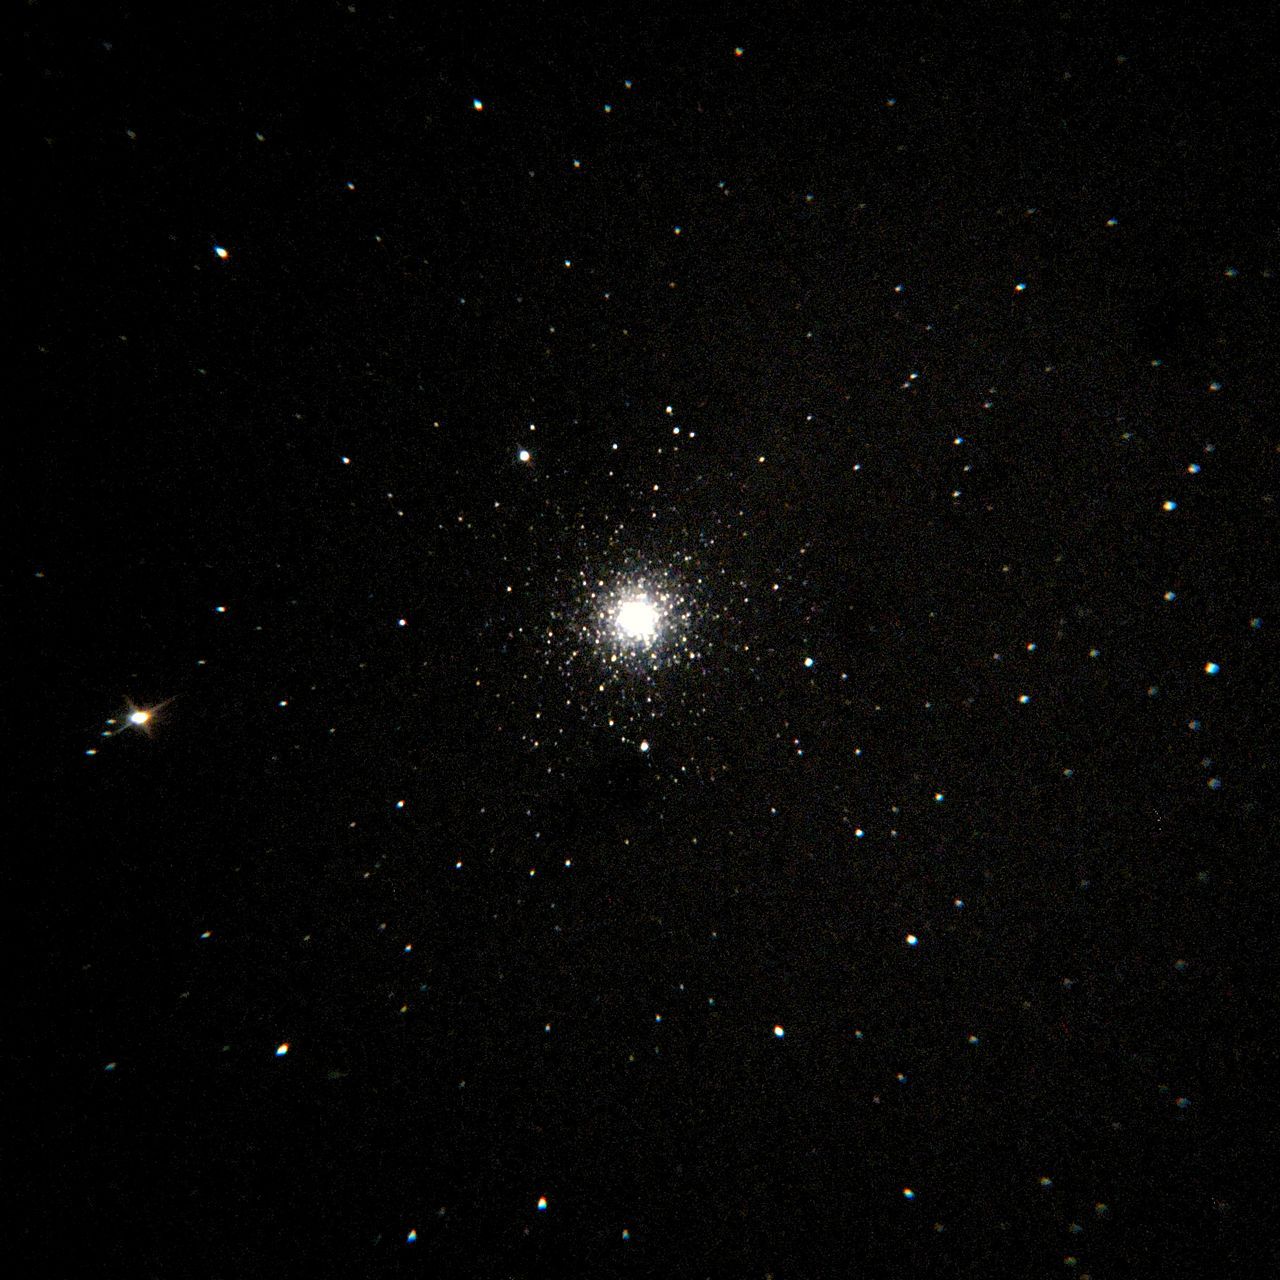 Enlarged image of M3